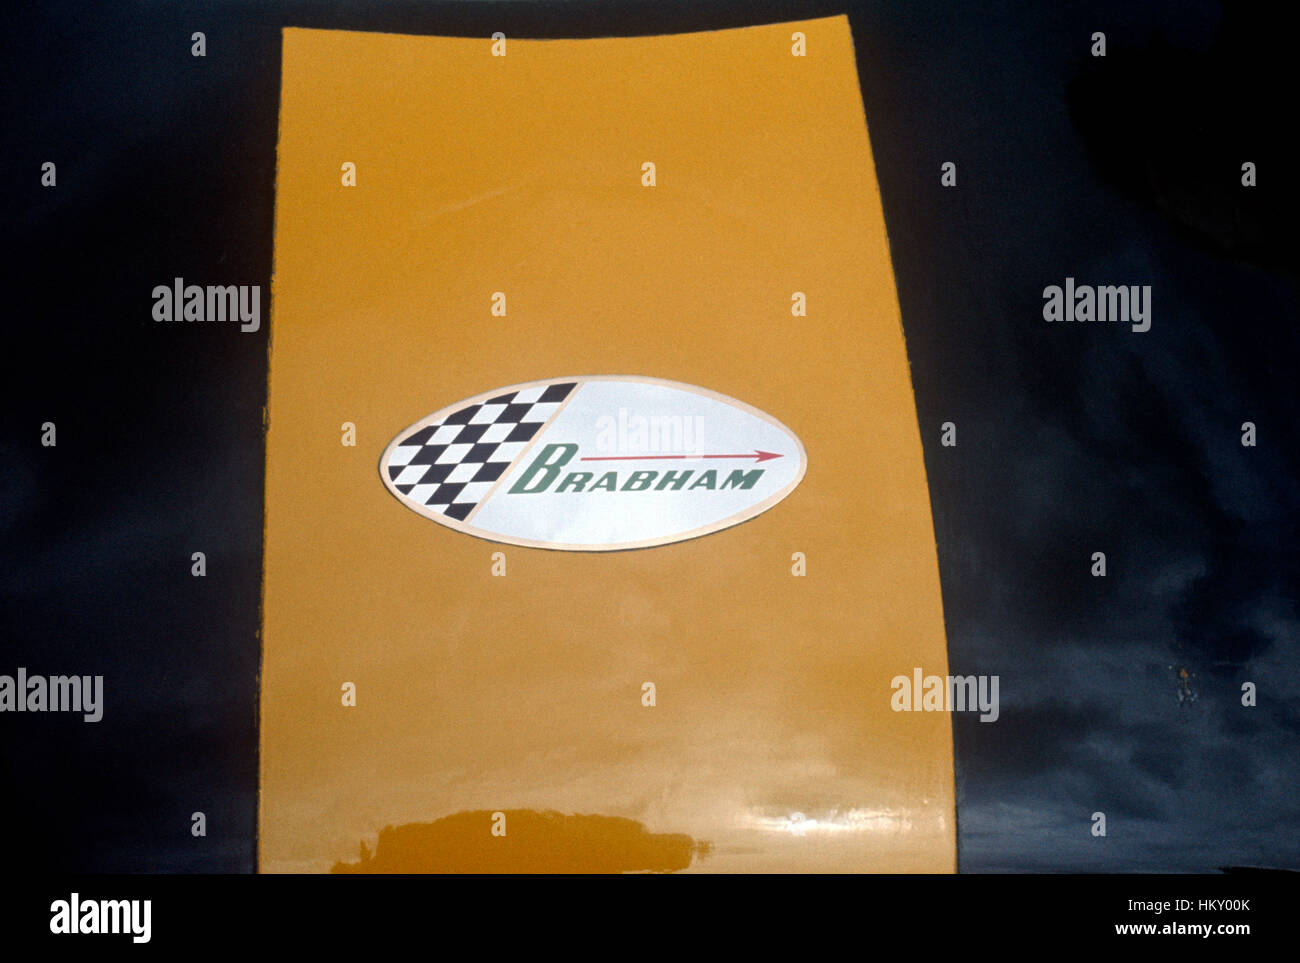 Brabham ogiva logo Foto Stock